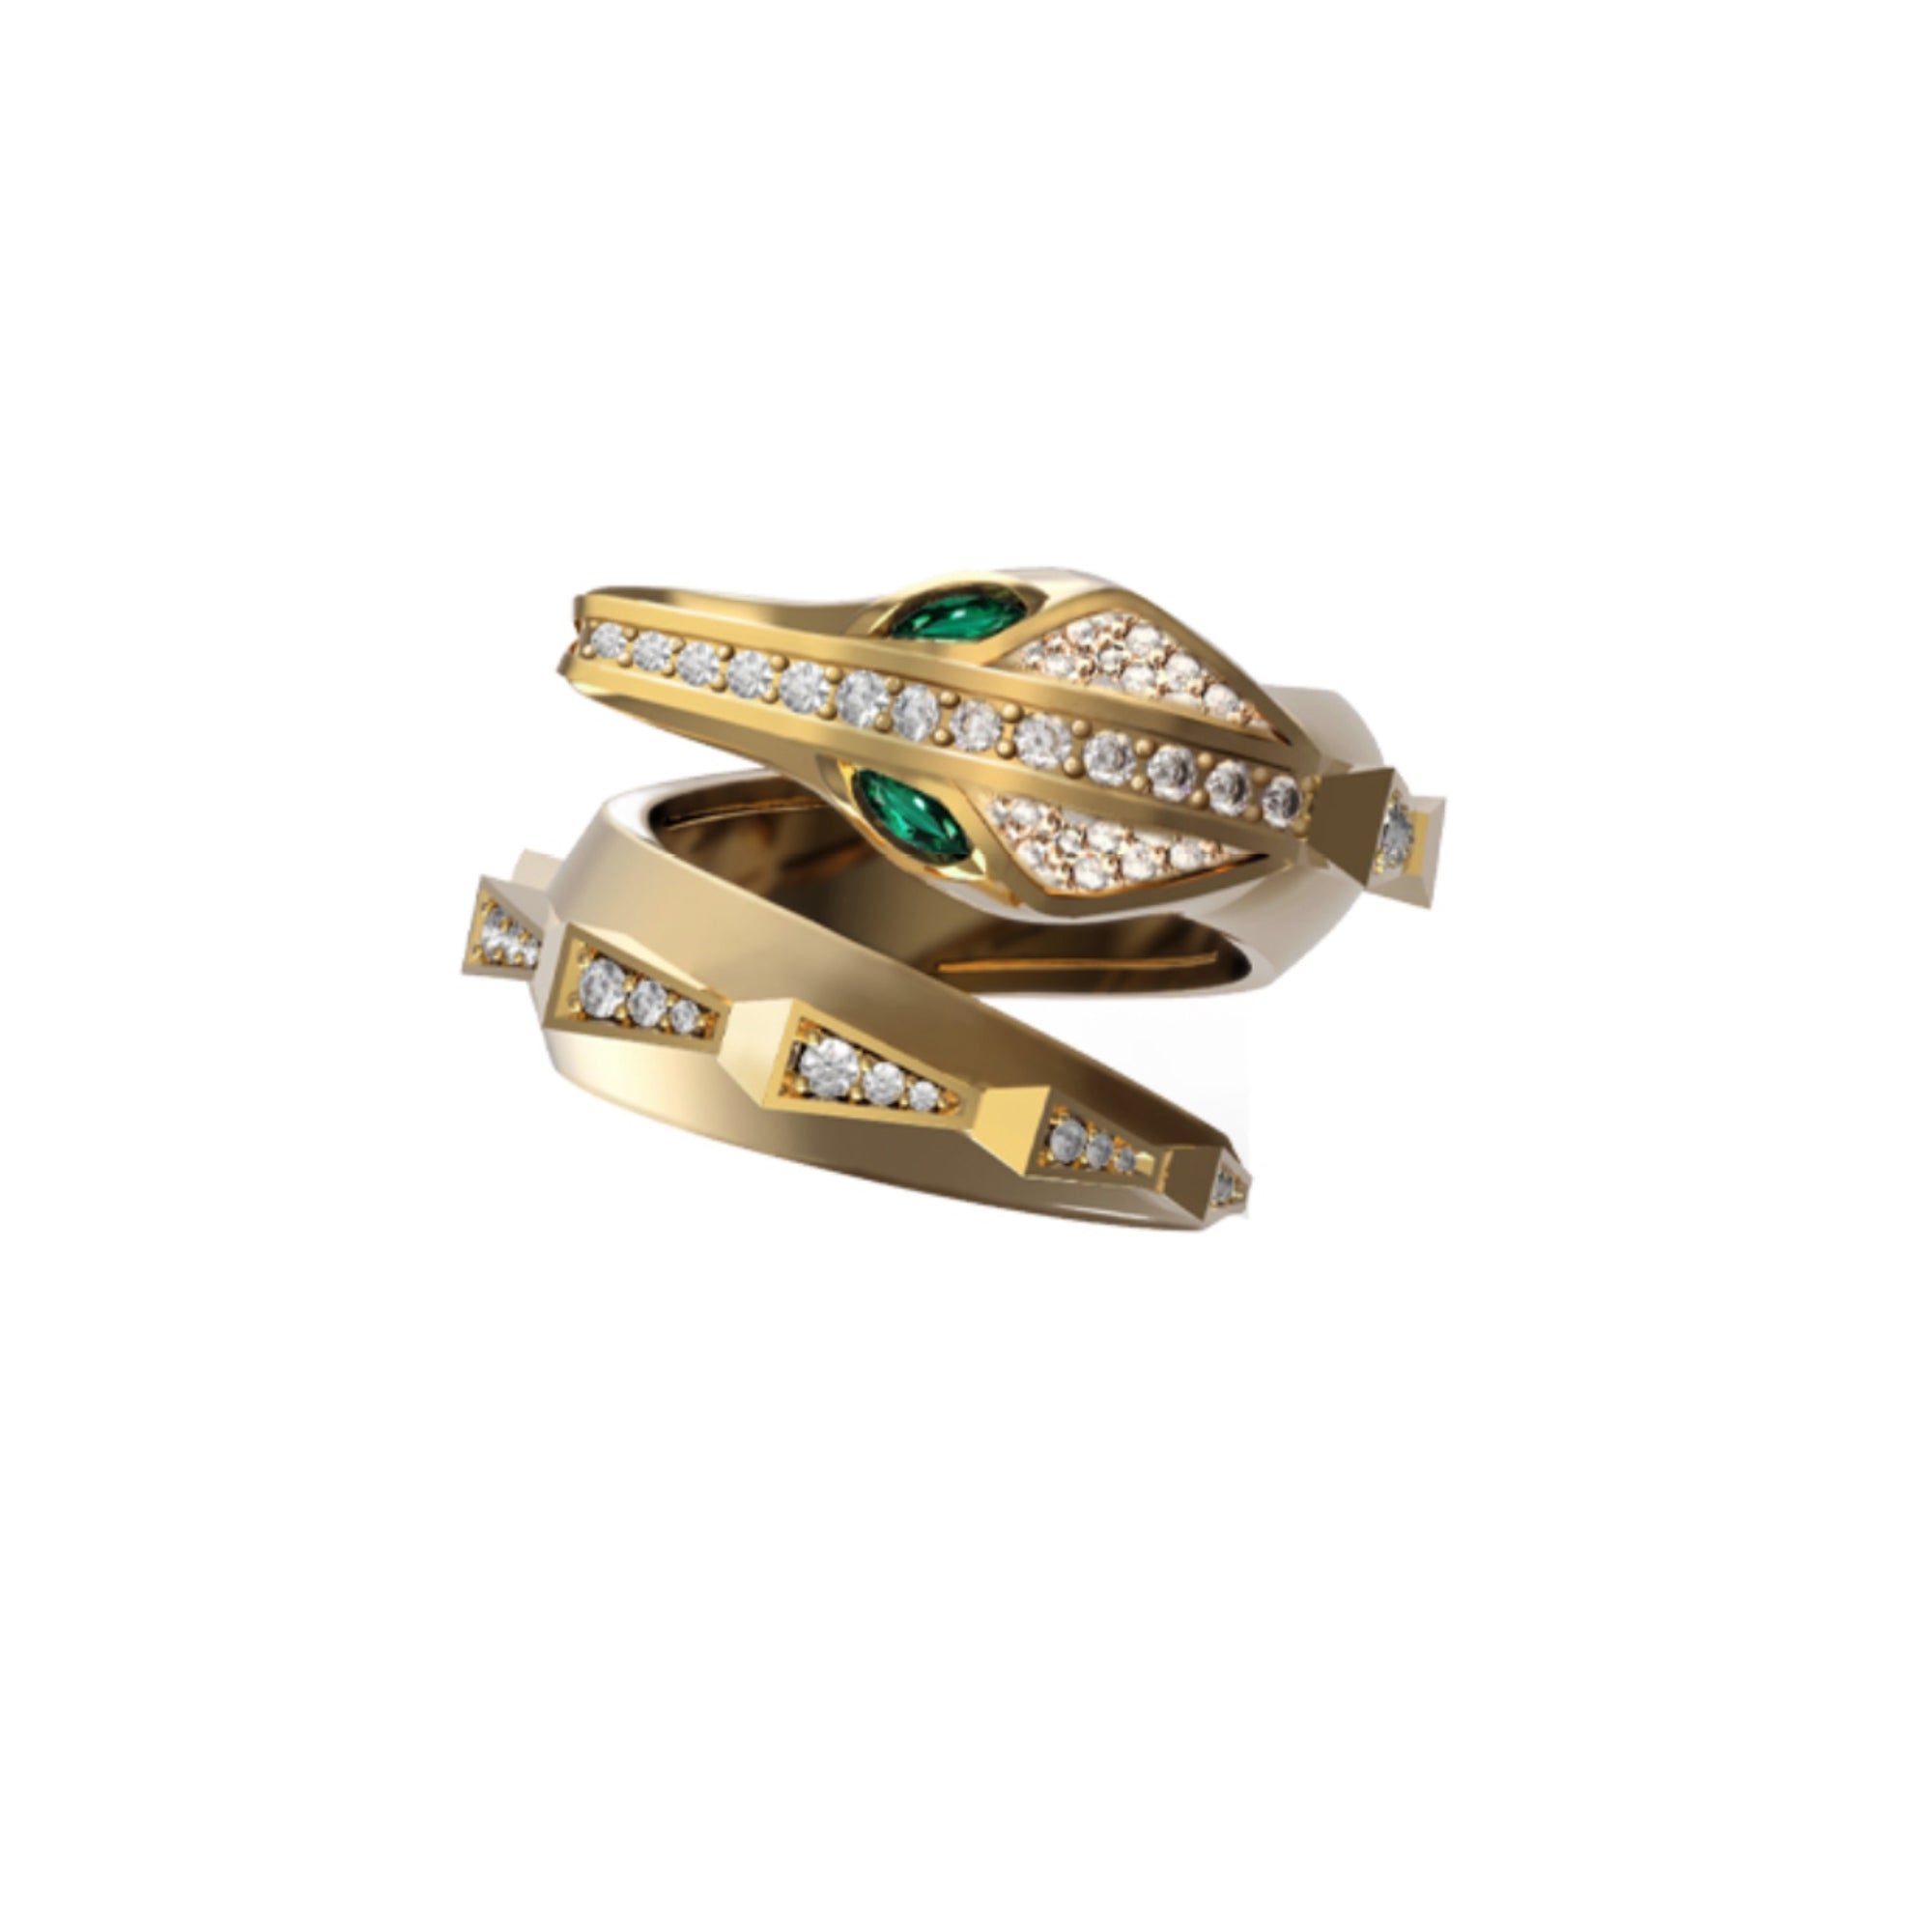 SIGNATURE SPIKE CROCO HALF SET DIAMOND RING YELLOW GOLD | Ring | 18K yellow gold, croco, crocodream, diamonds, Ring, signature, spike | ORLOV